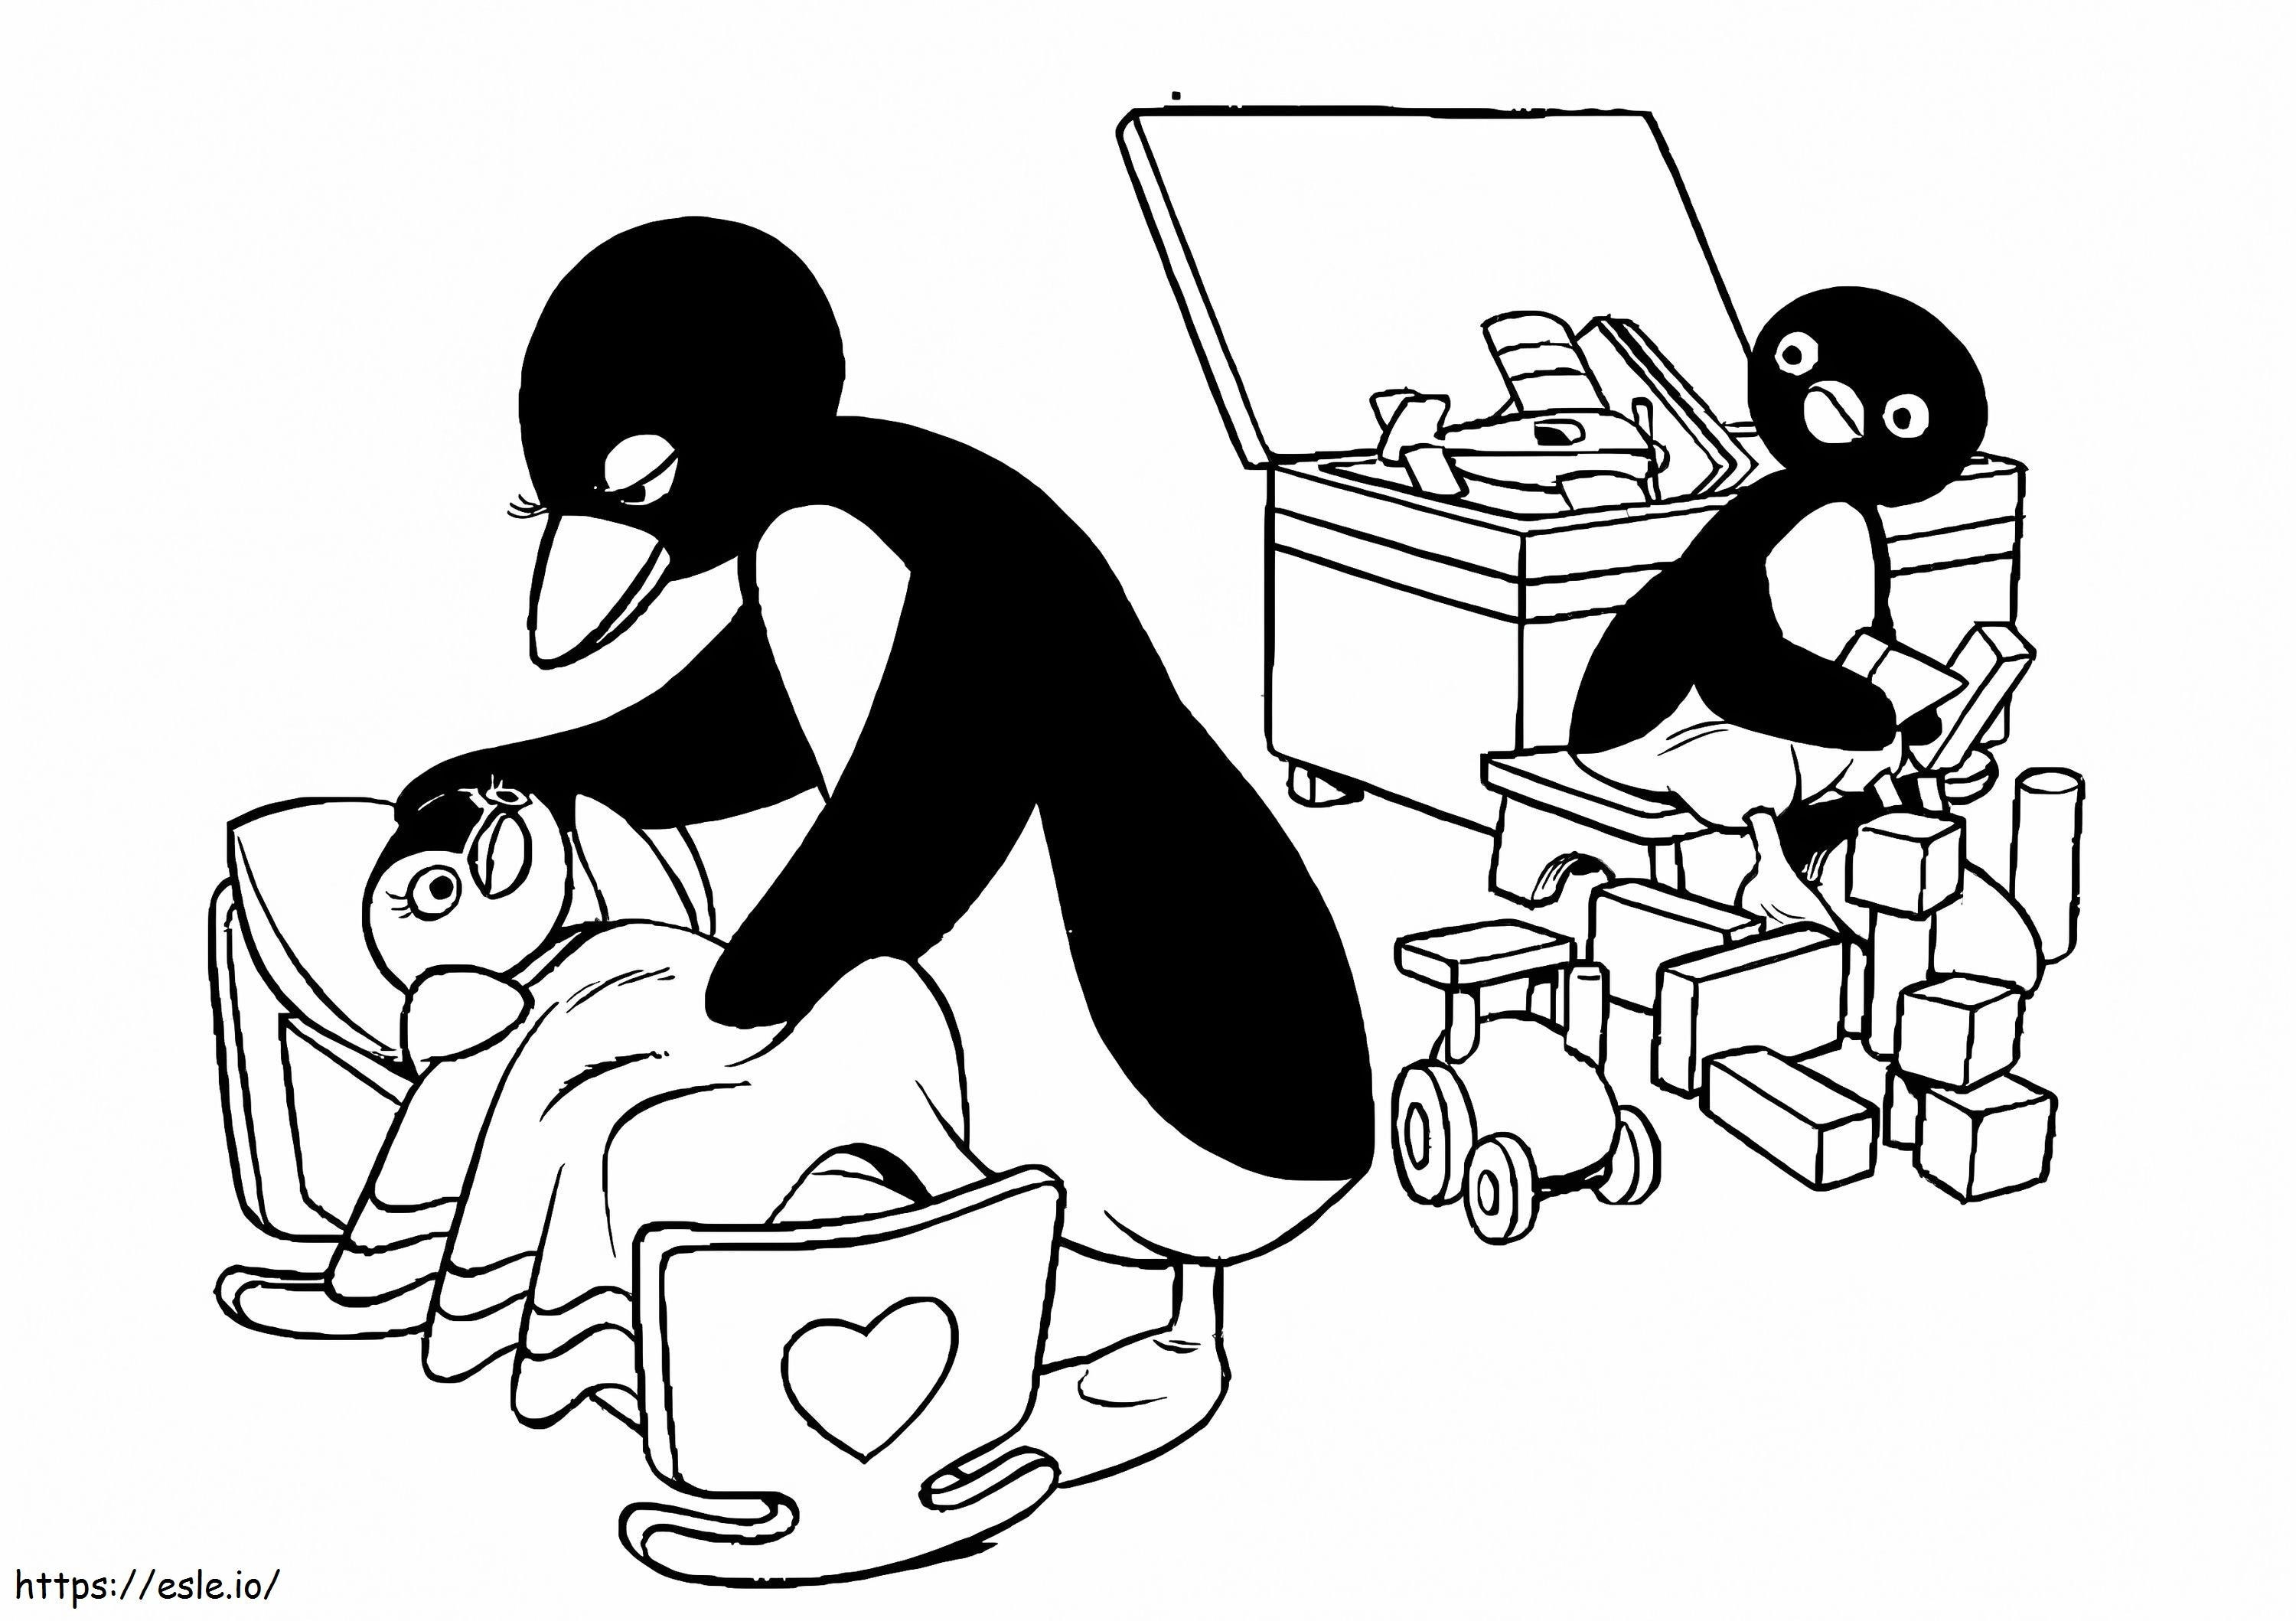 Printable Pingu coloring page